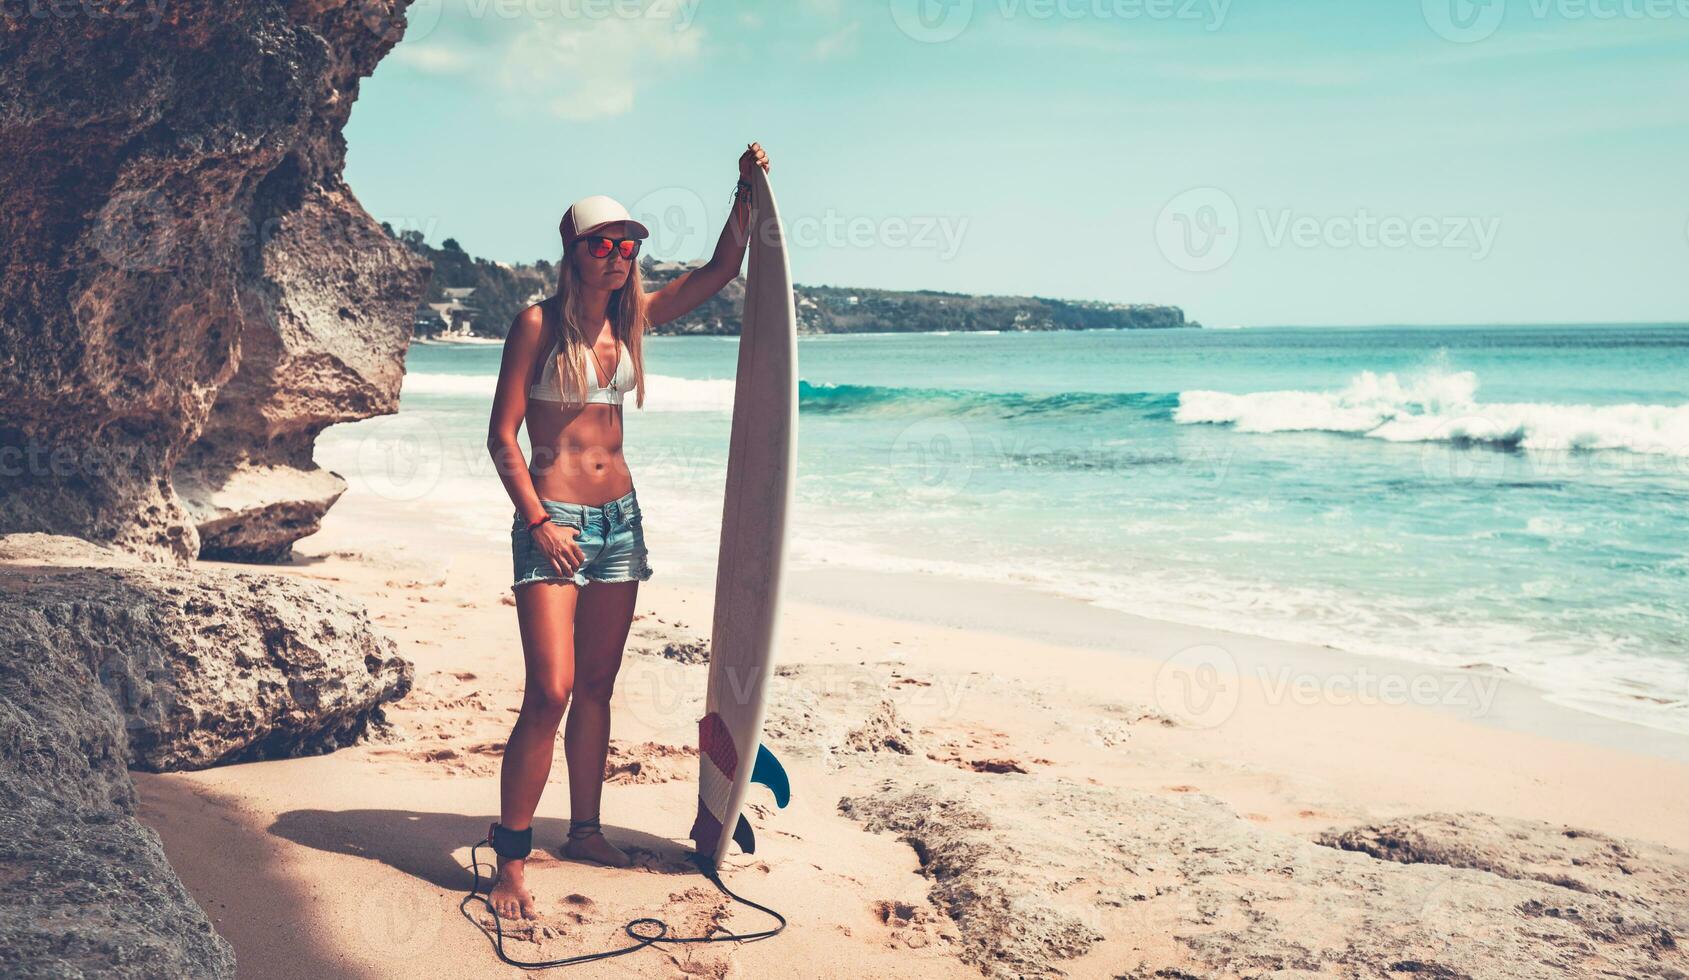 Beautiful surfer girl photo